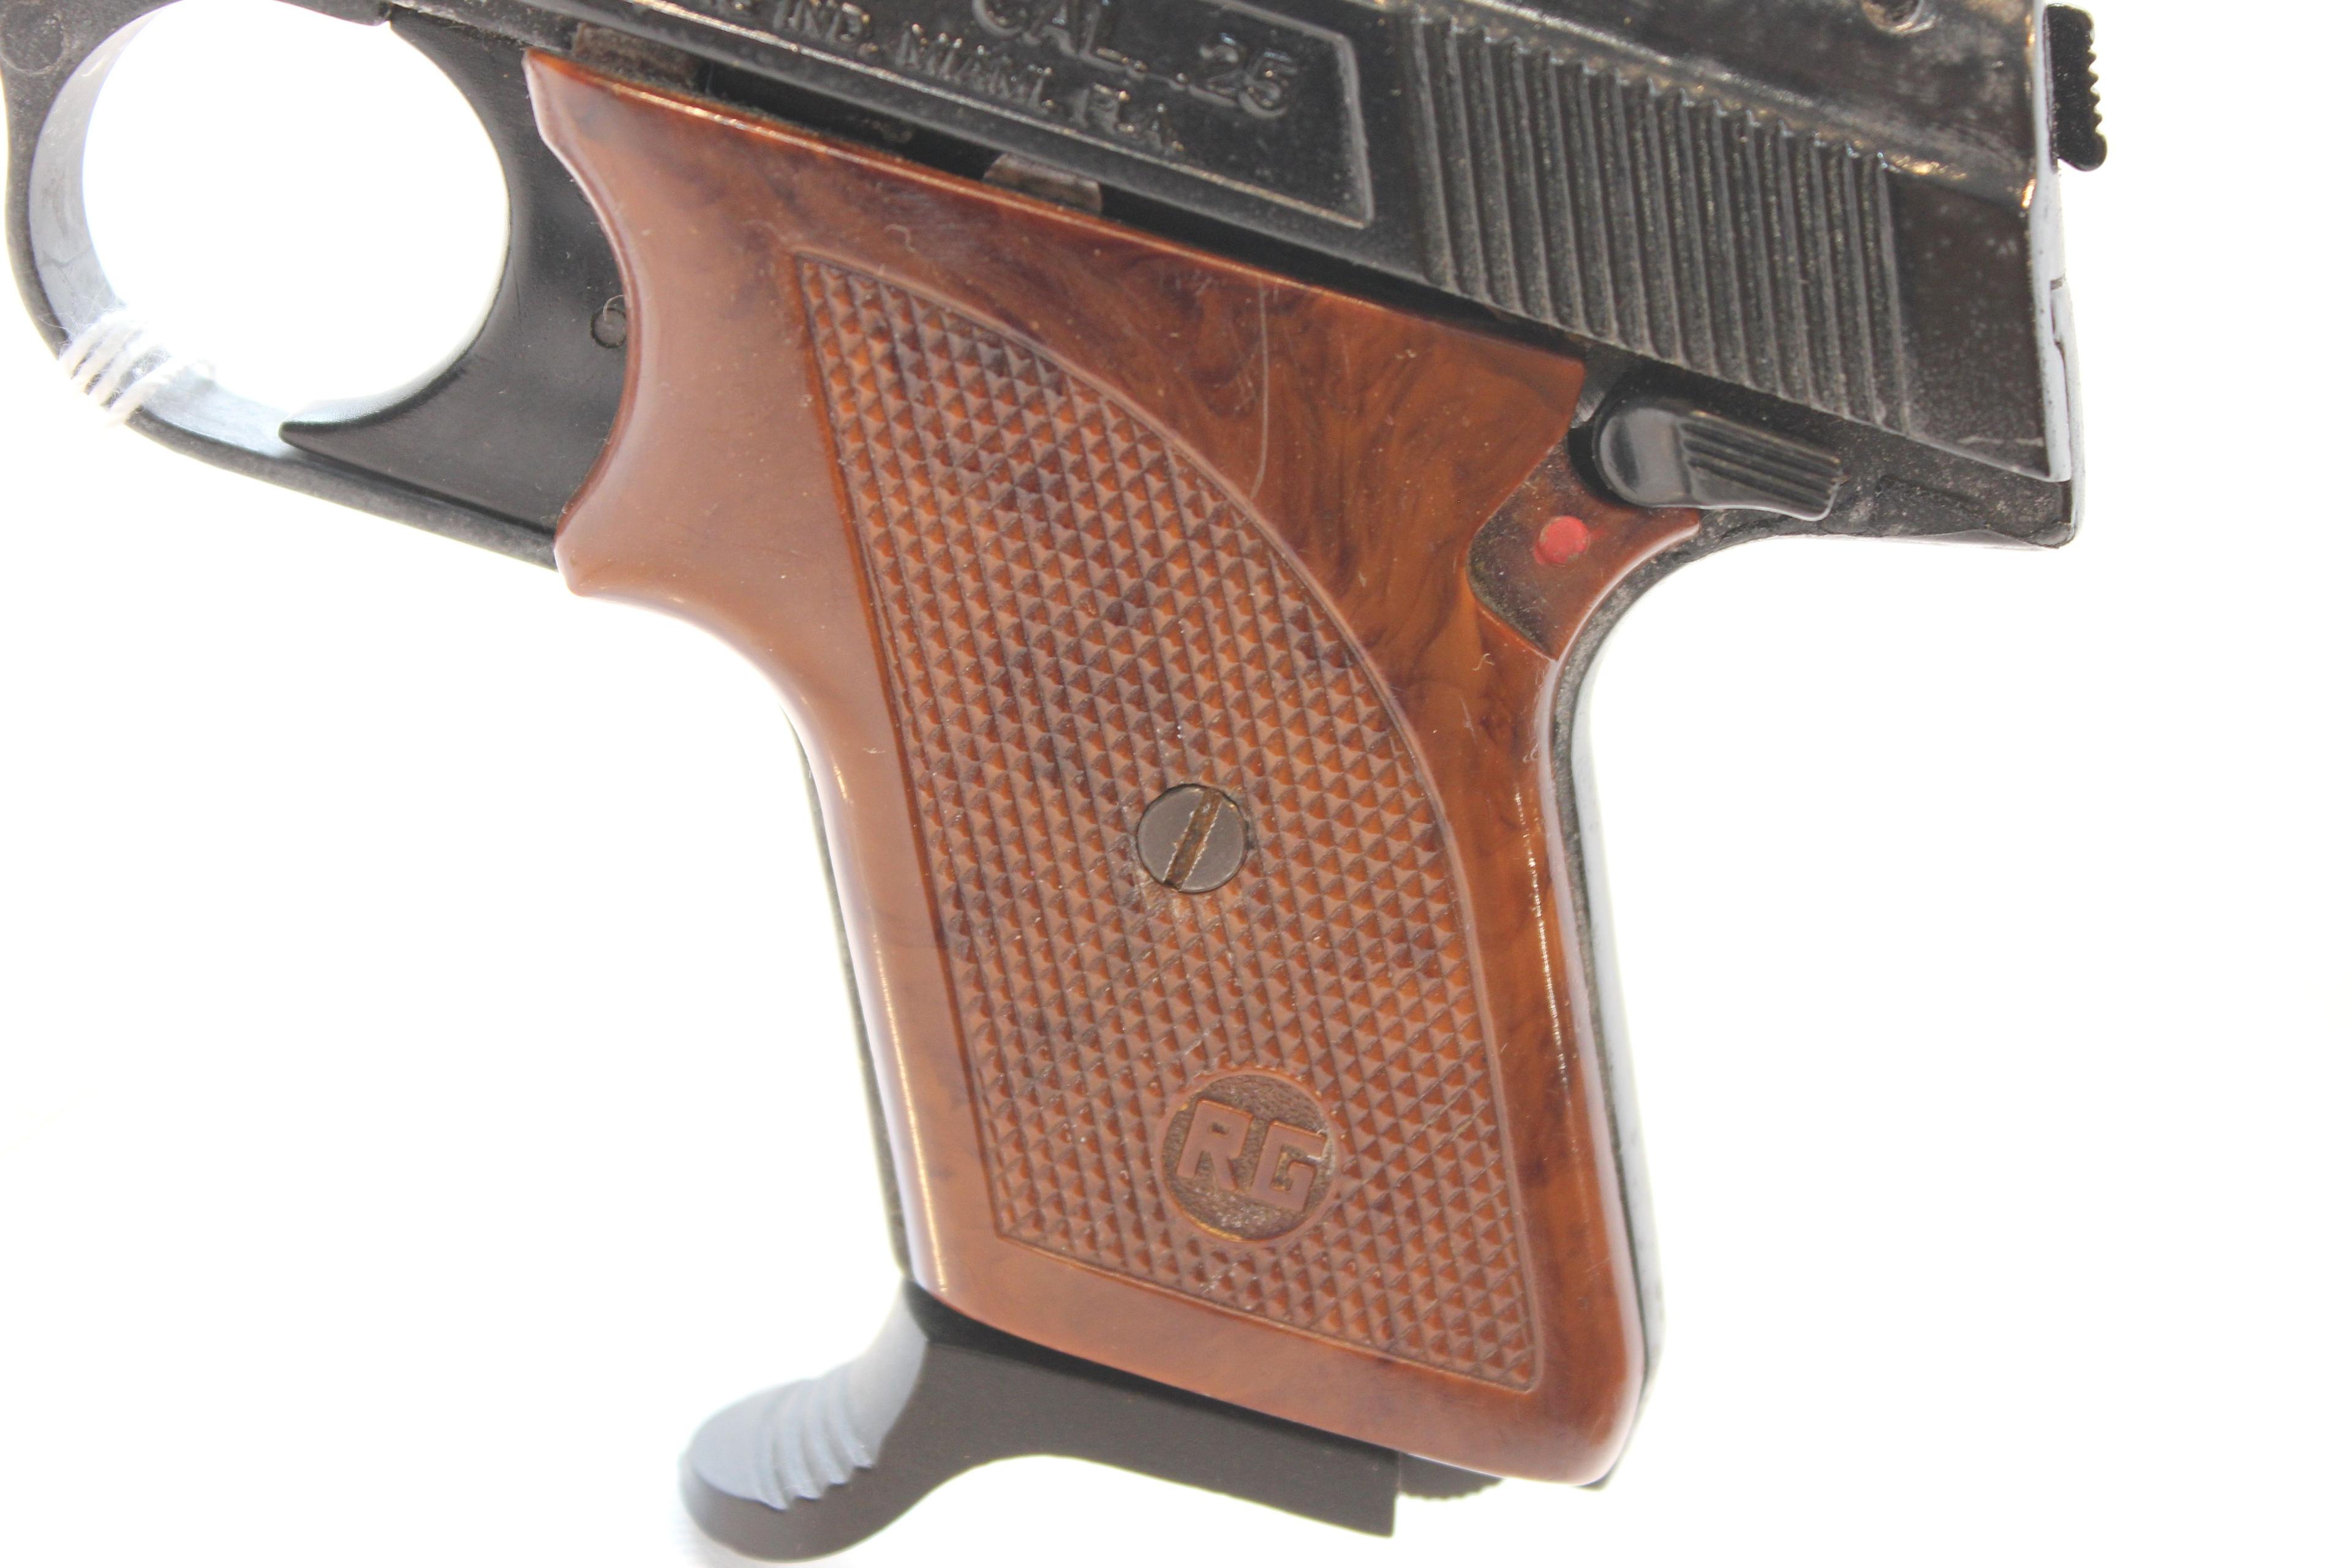 R.G. Model 26 .25 Auto Cal. Semi-Auto Pistol w/Brown Bakelite Grips and 8 Rd. Magazine; SN 005445